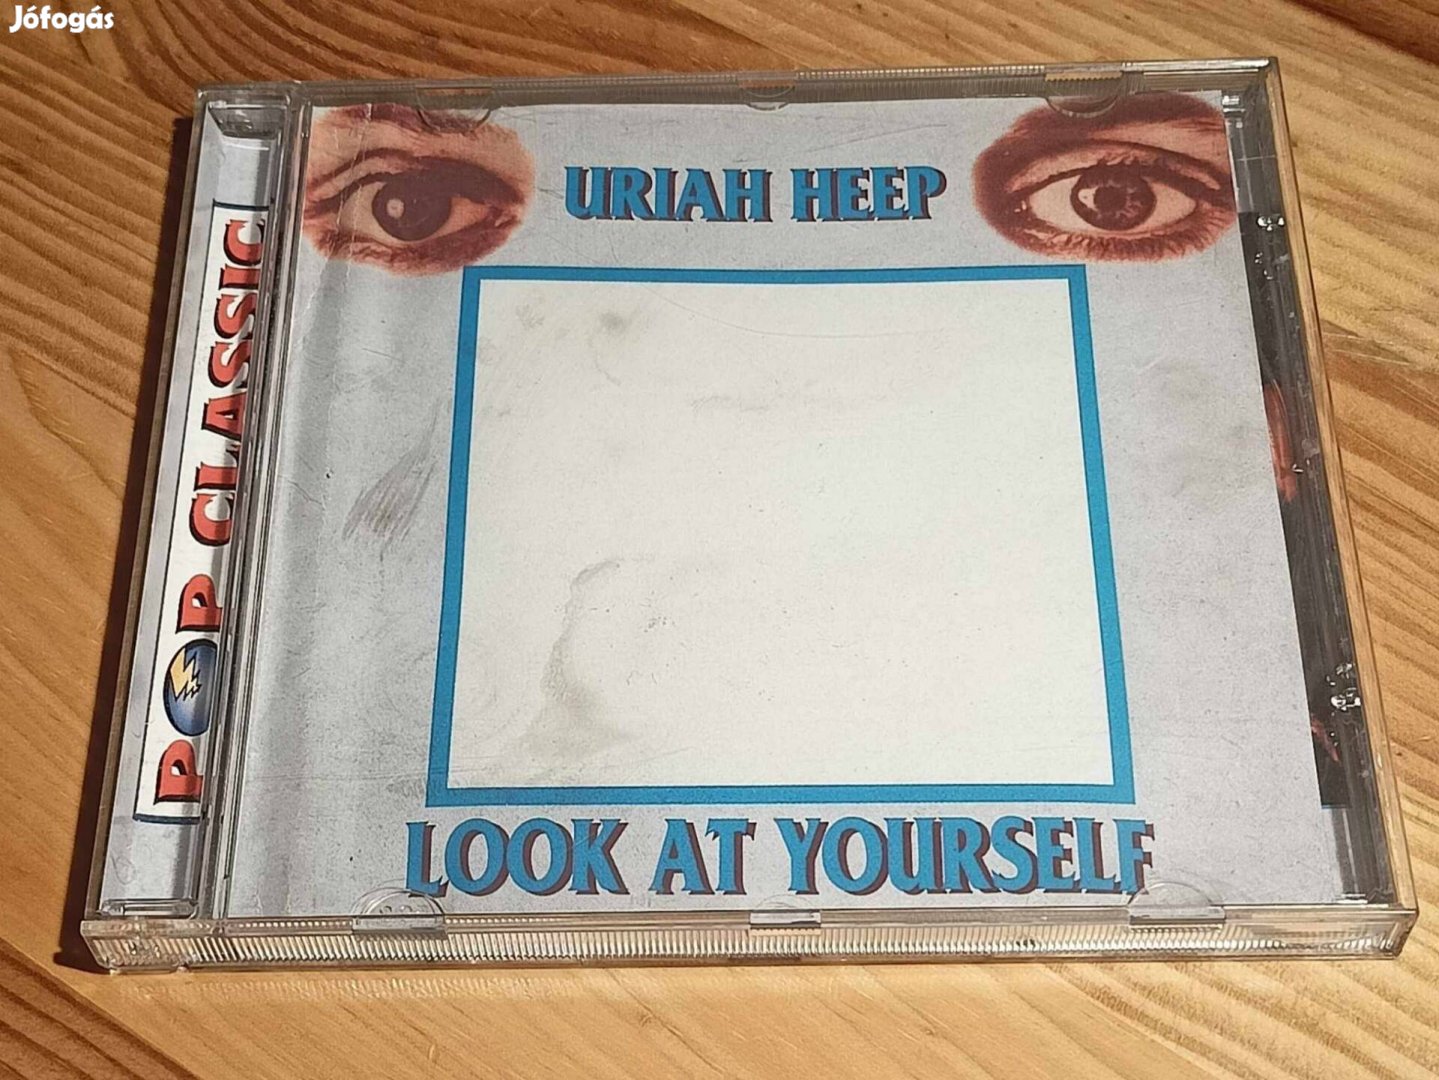 Uriah Heep - Look at yourself CD